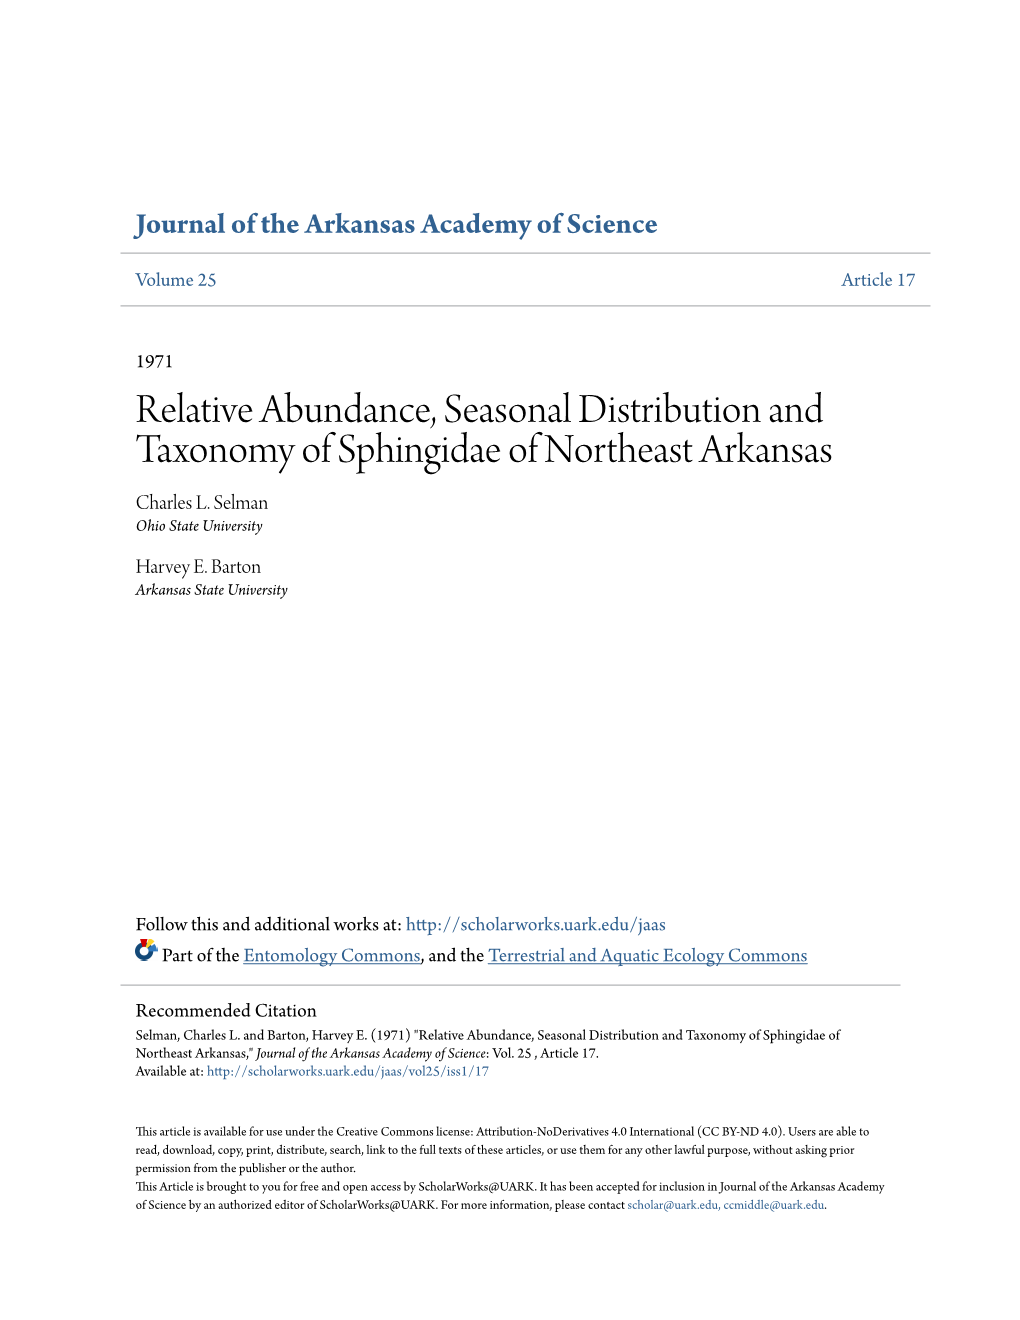 Relative Abundance, Seasonal Distribution and Taxonomy of Sphingidae of Northeast Arkansas Charles L